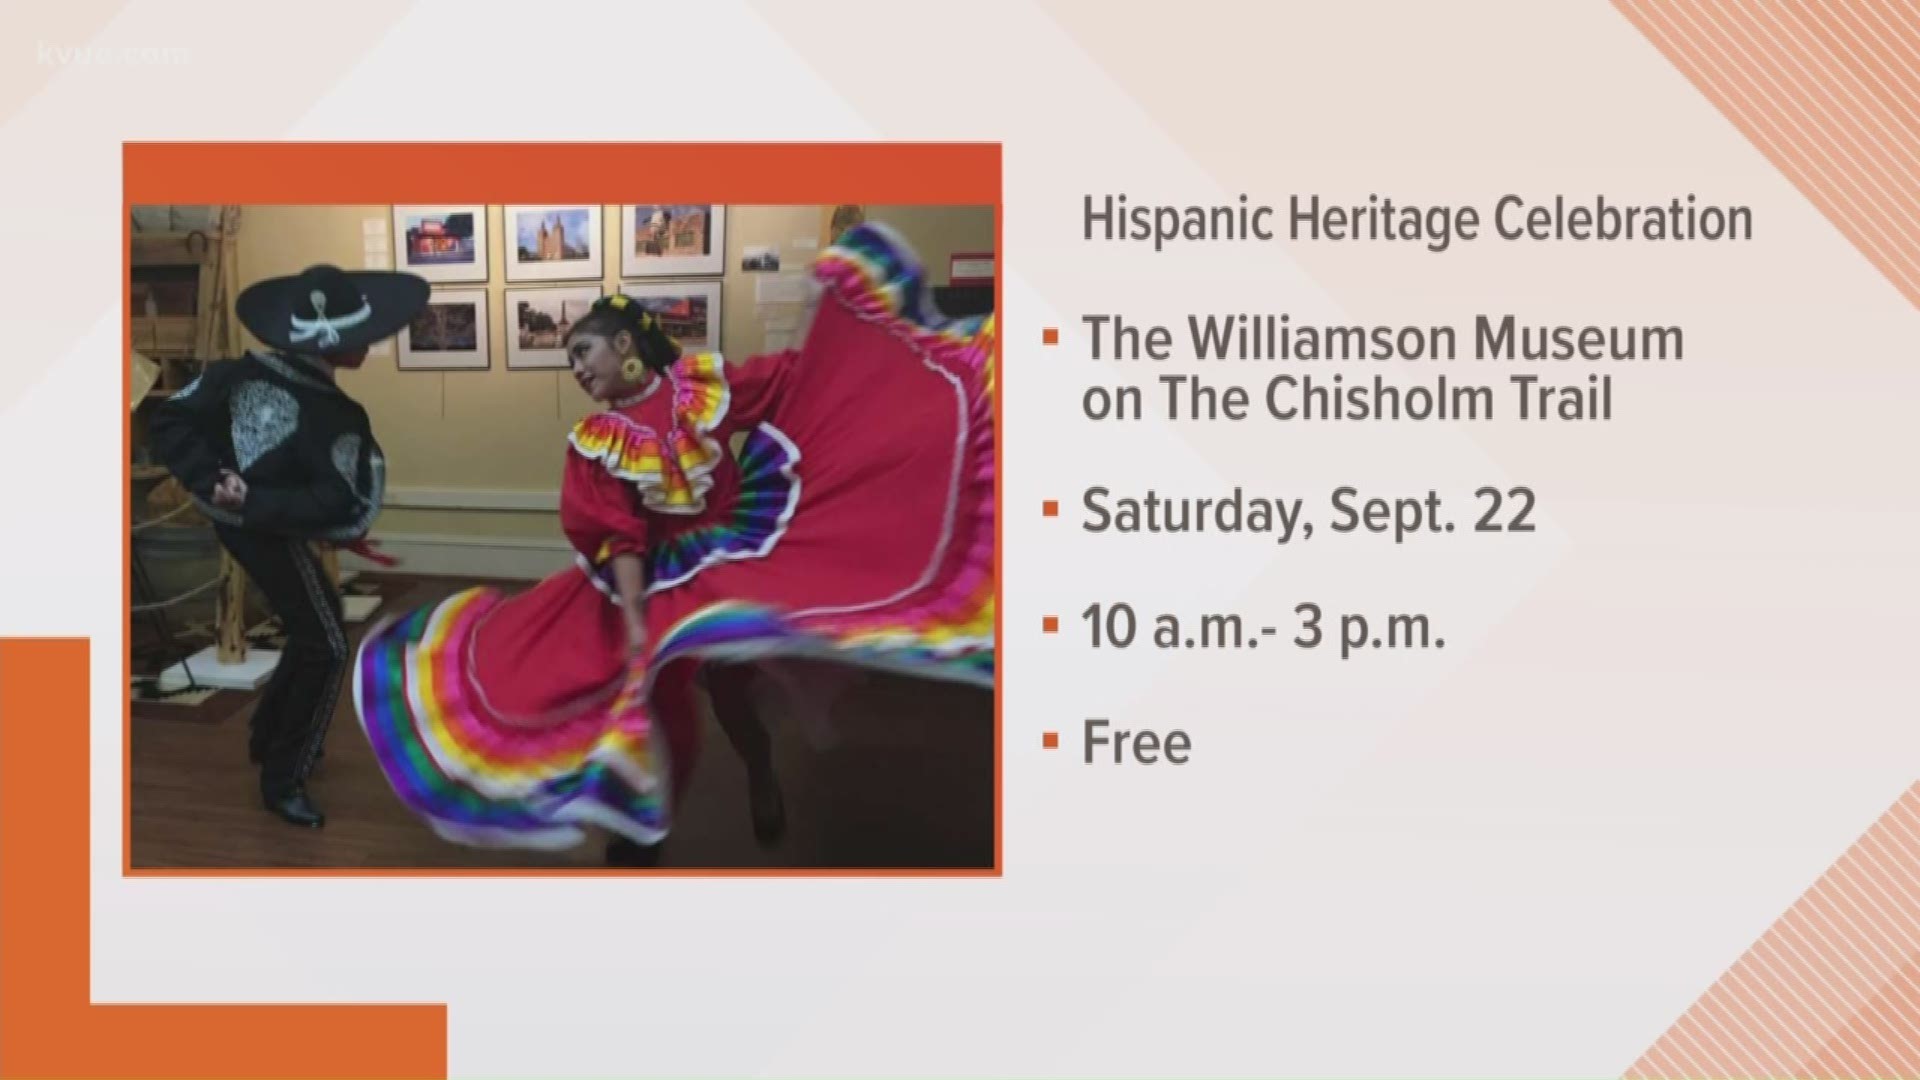 Hispanic heritage celebration this weekend